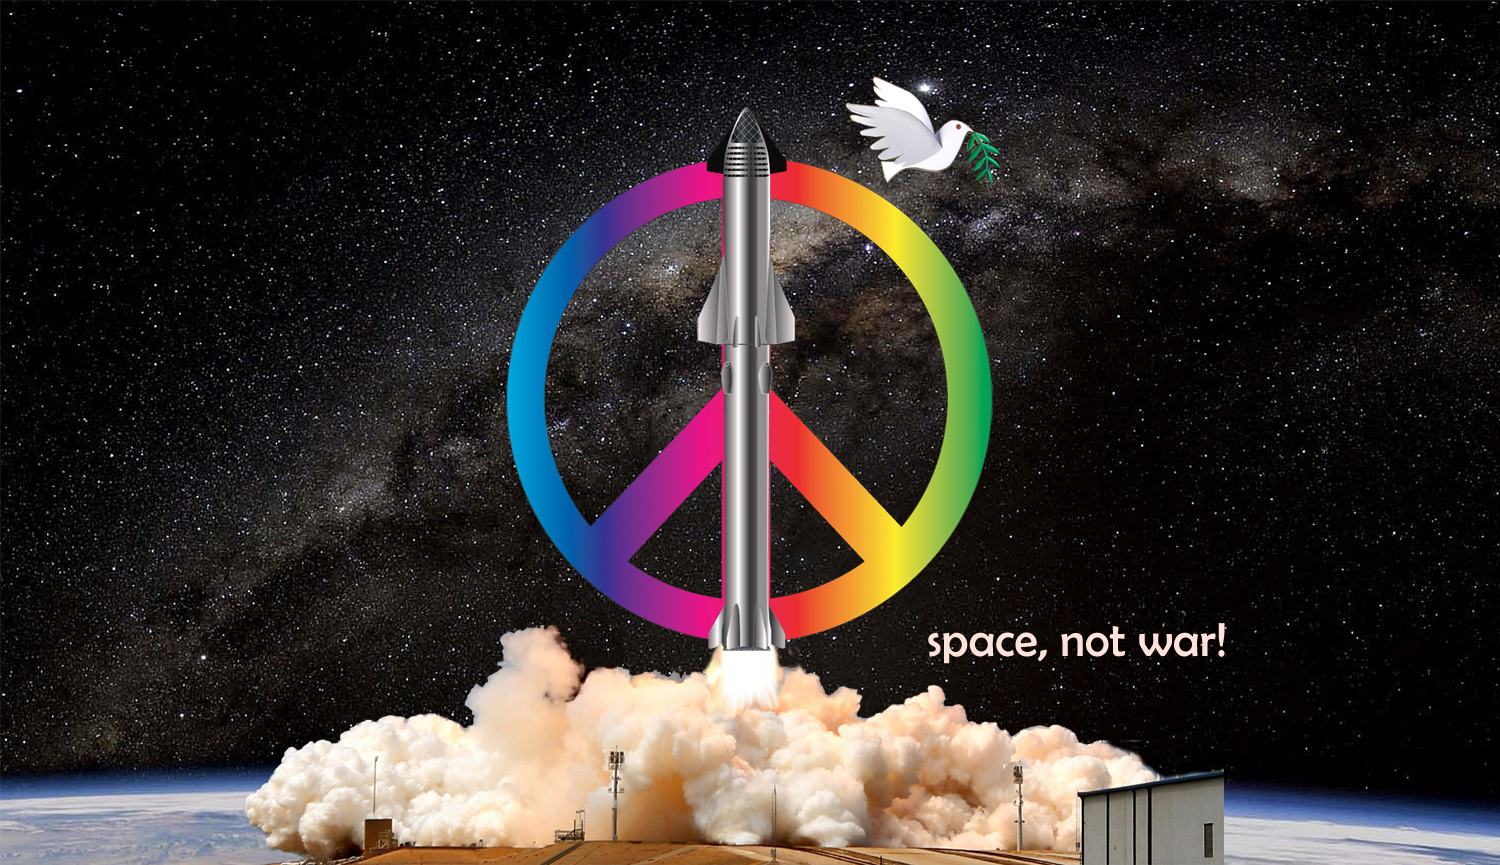 Make space, not war!